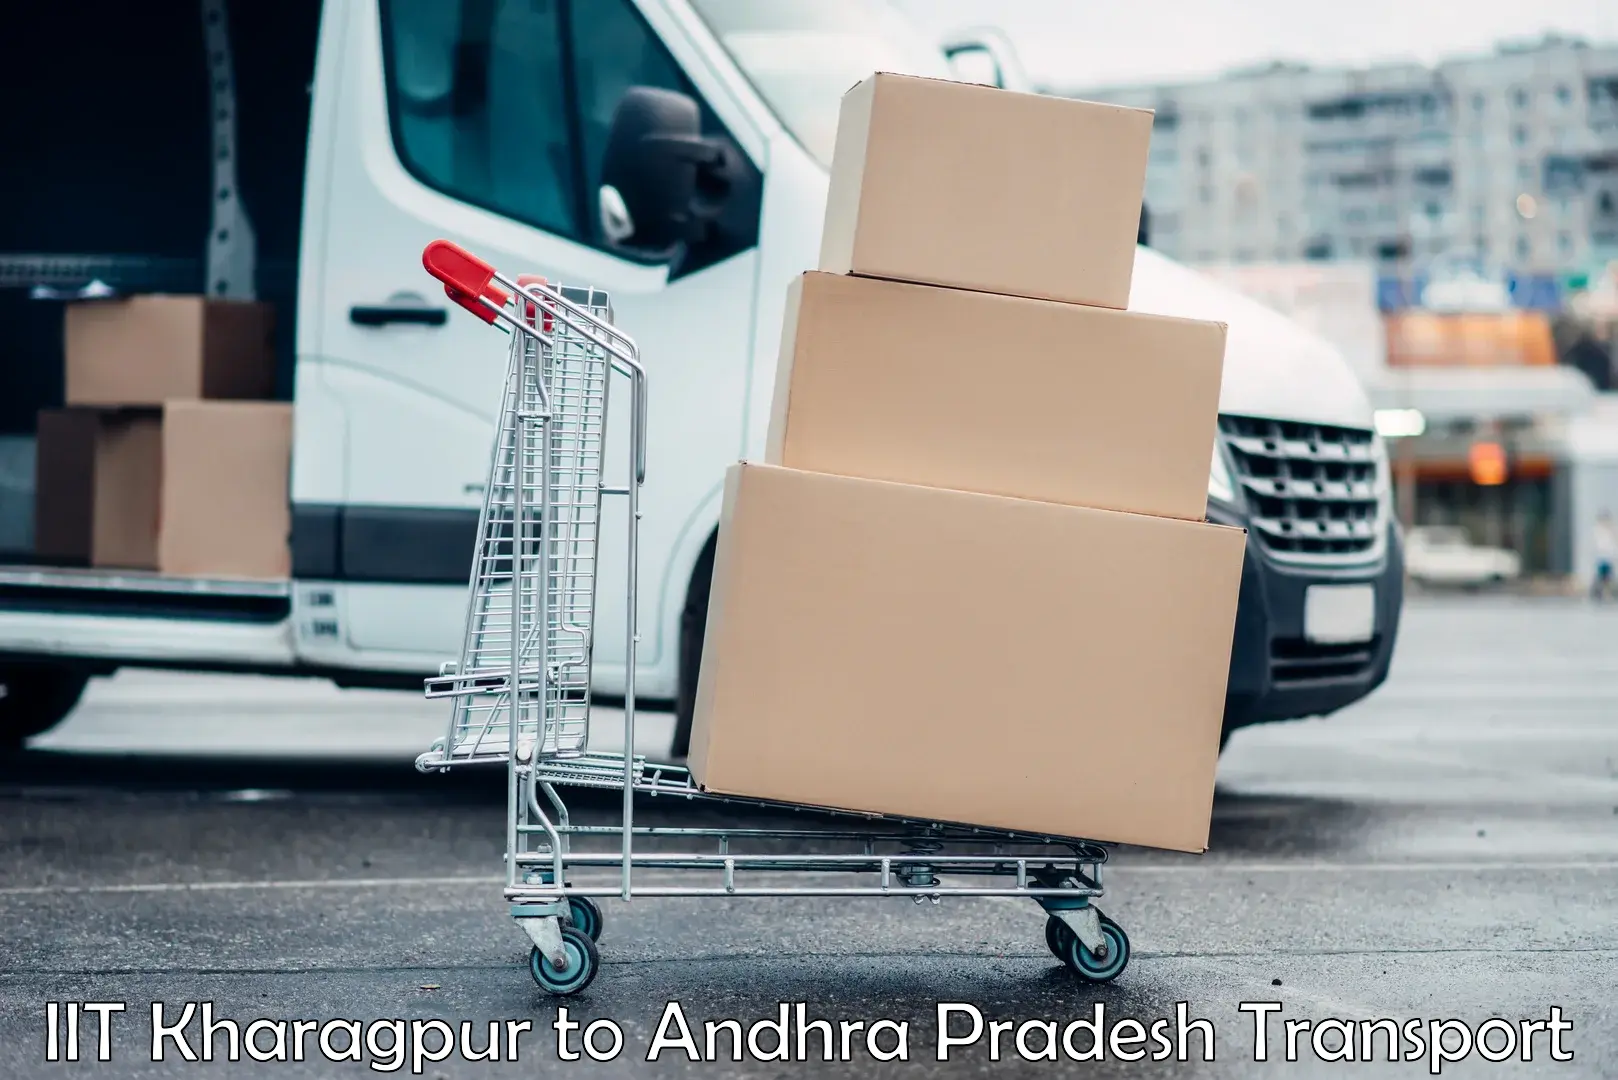 Transport in sharing in IIT Kharagpur to Andhra Pradesh